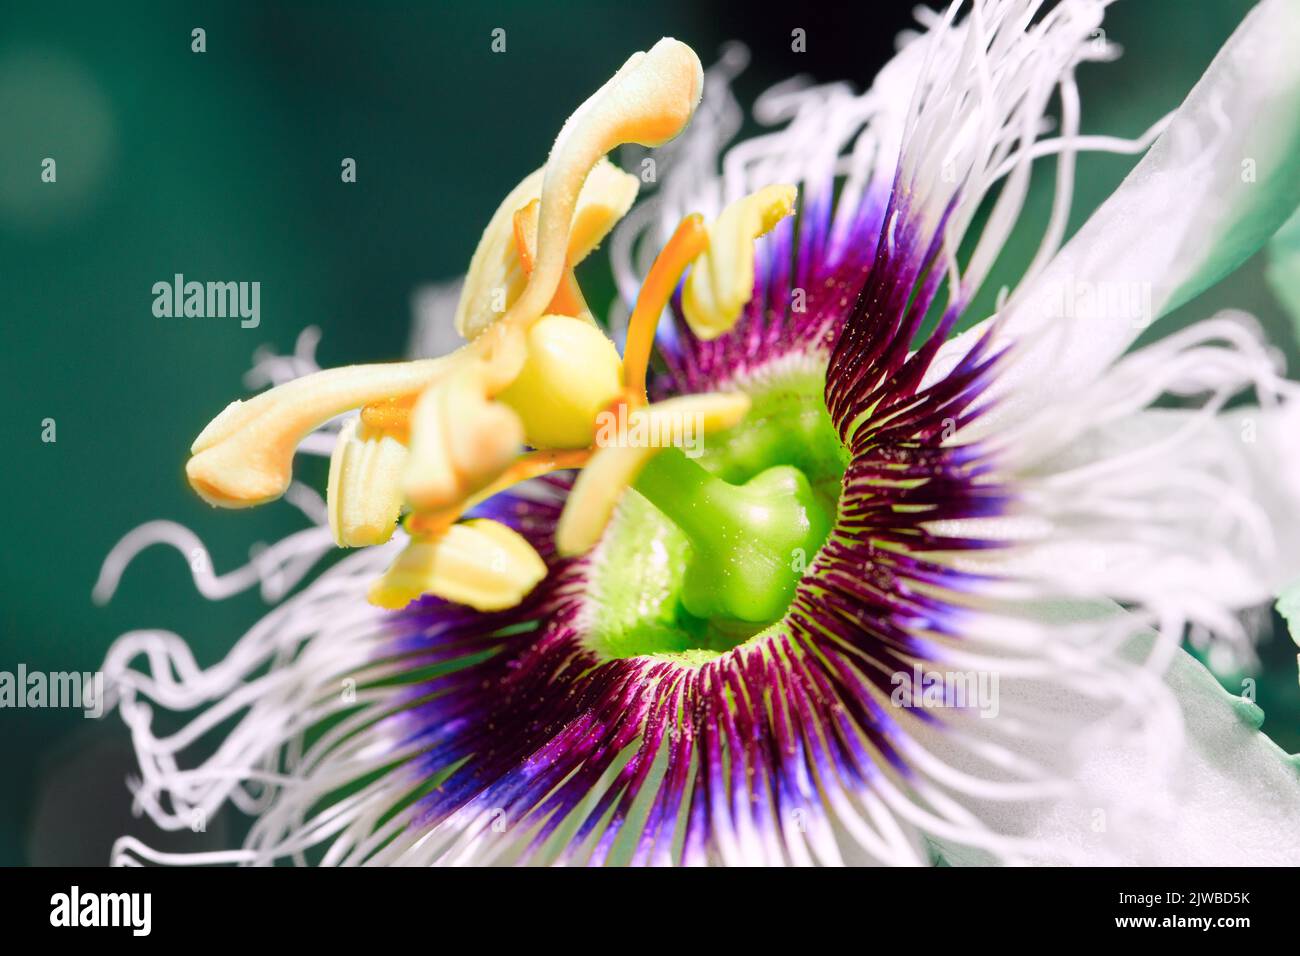 Passion fruit flower. Close-up imagin. Stock Photo